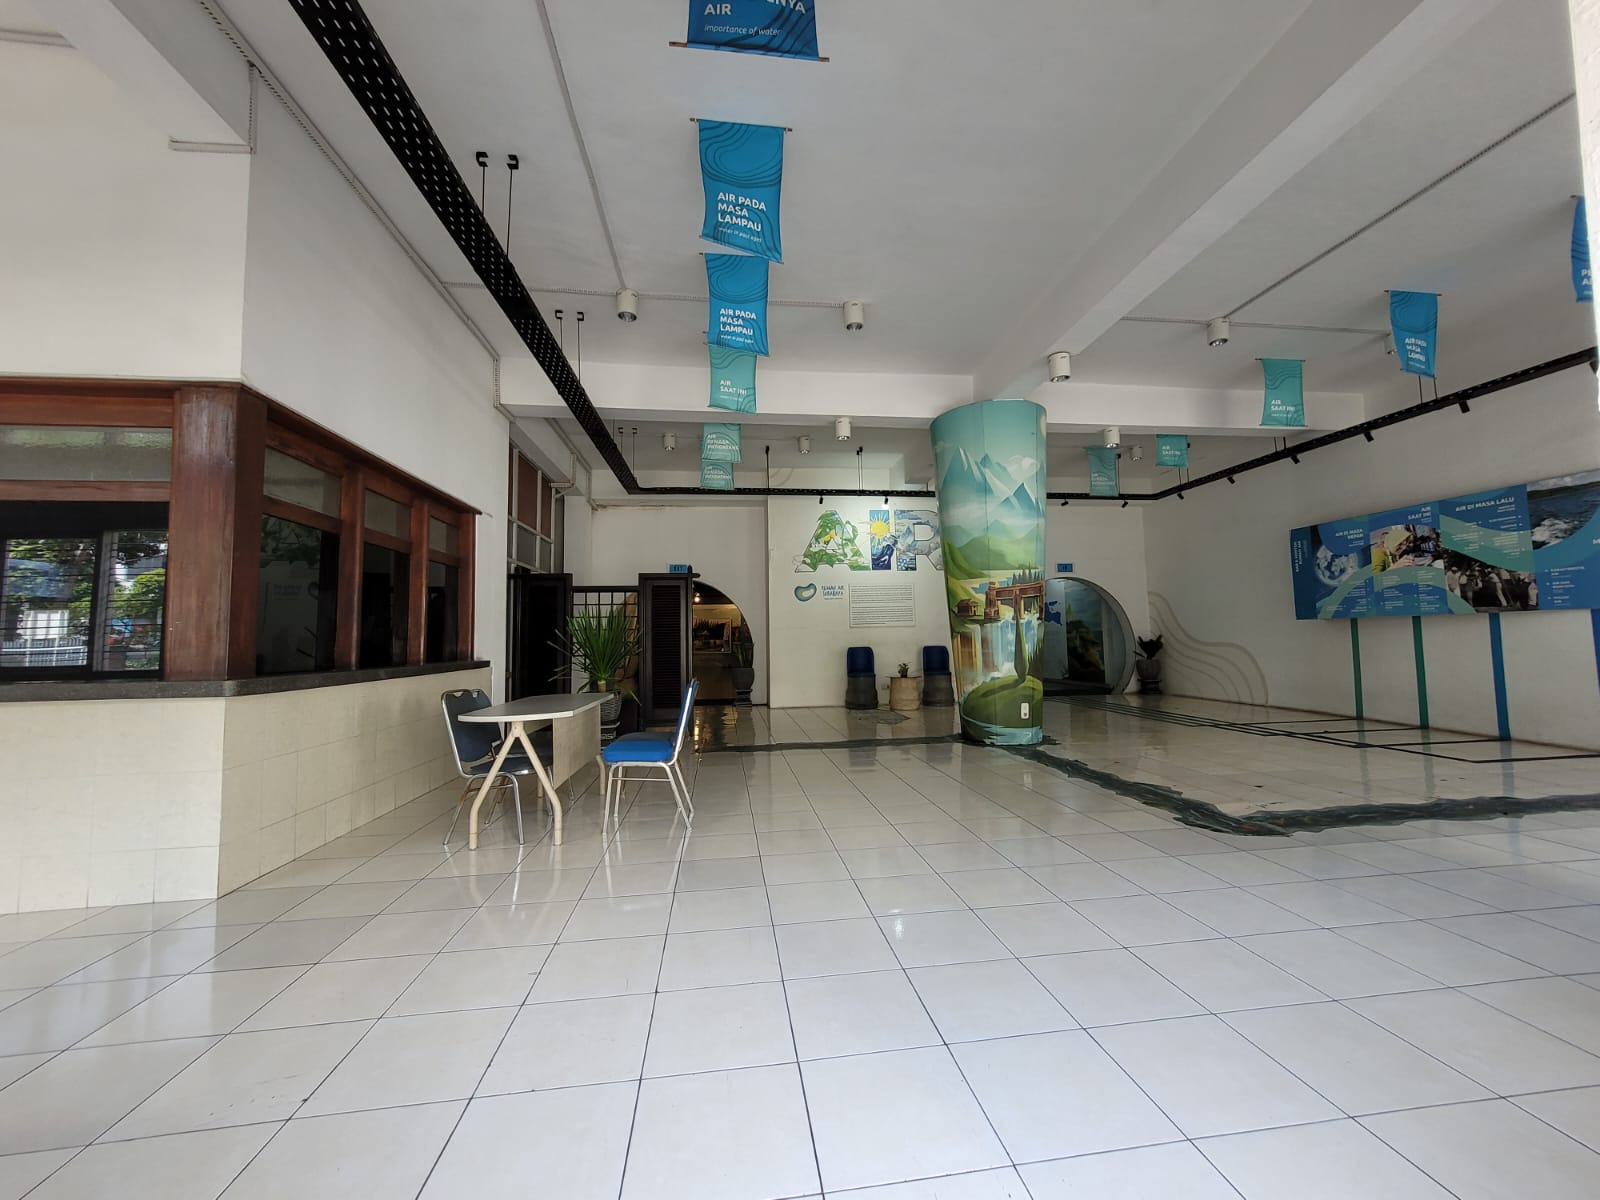 Kantor PDAM / Rumah Air Surabaya